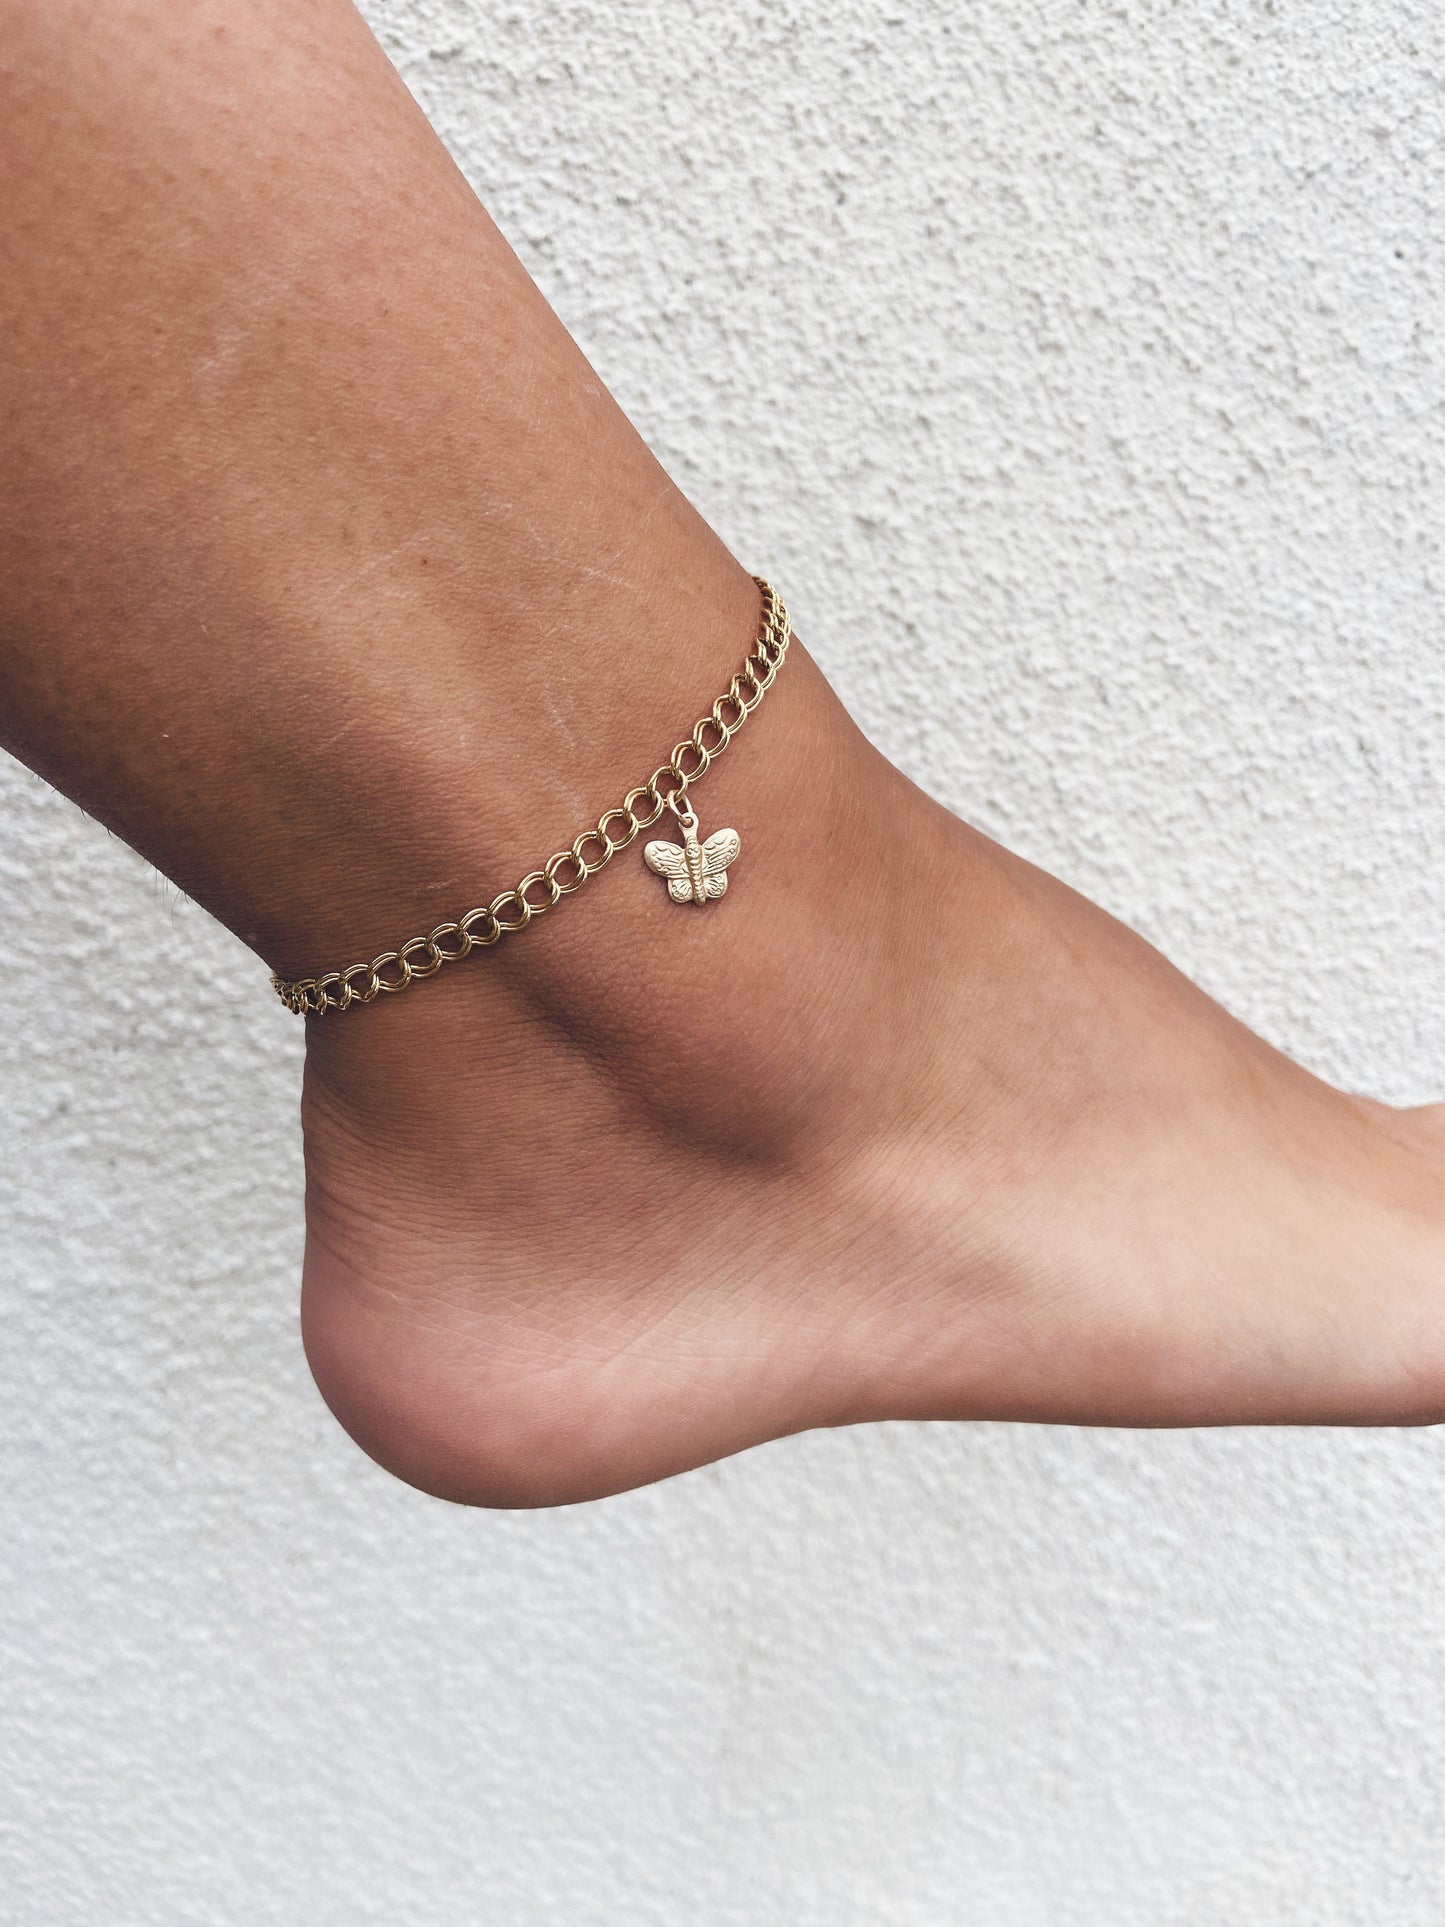 14k Gold Filled Butterfly Anklet